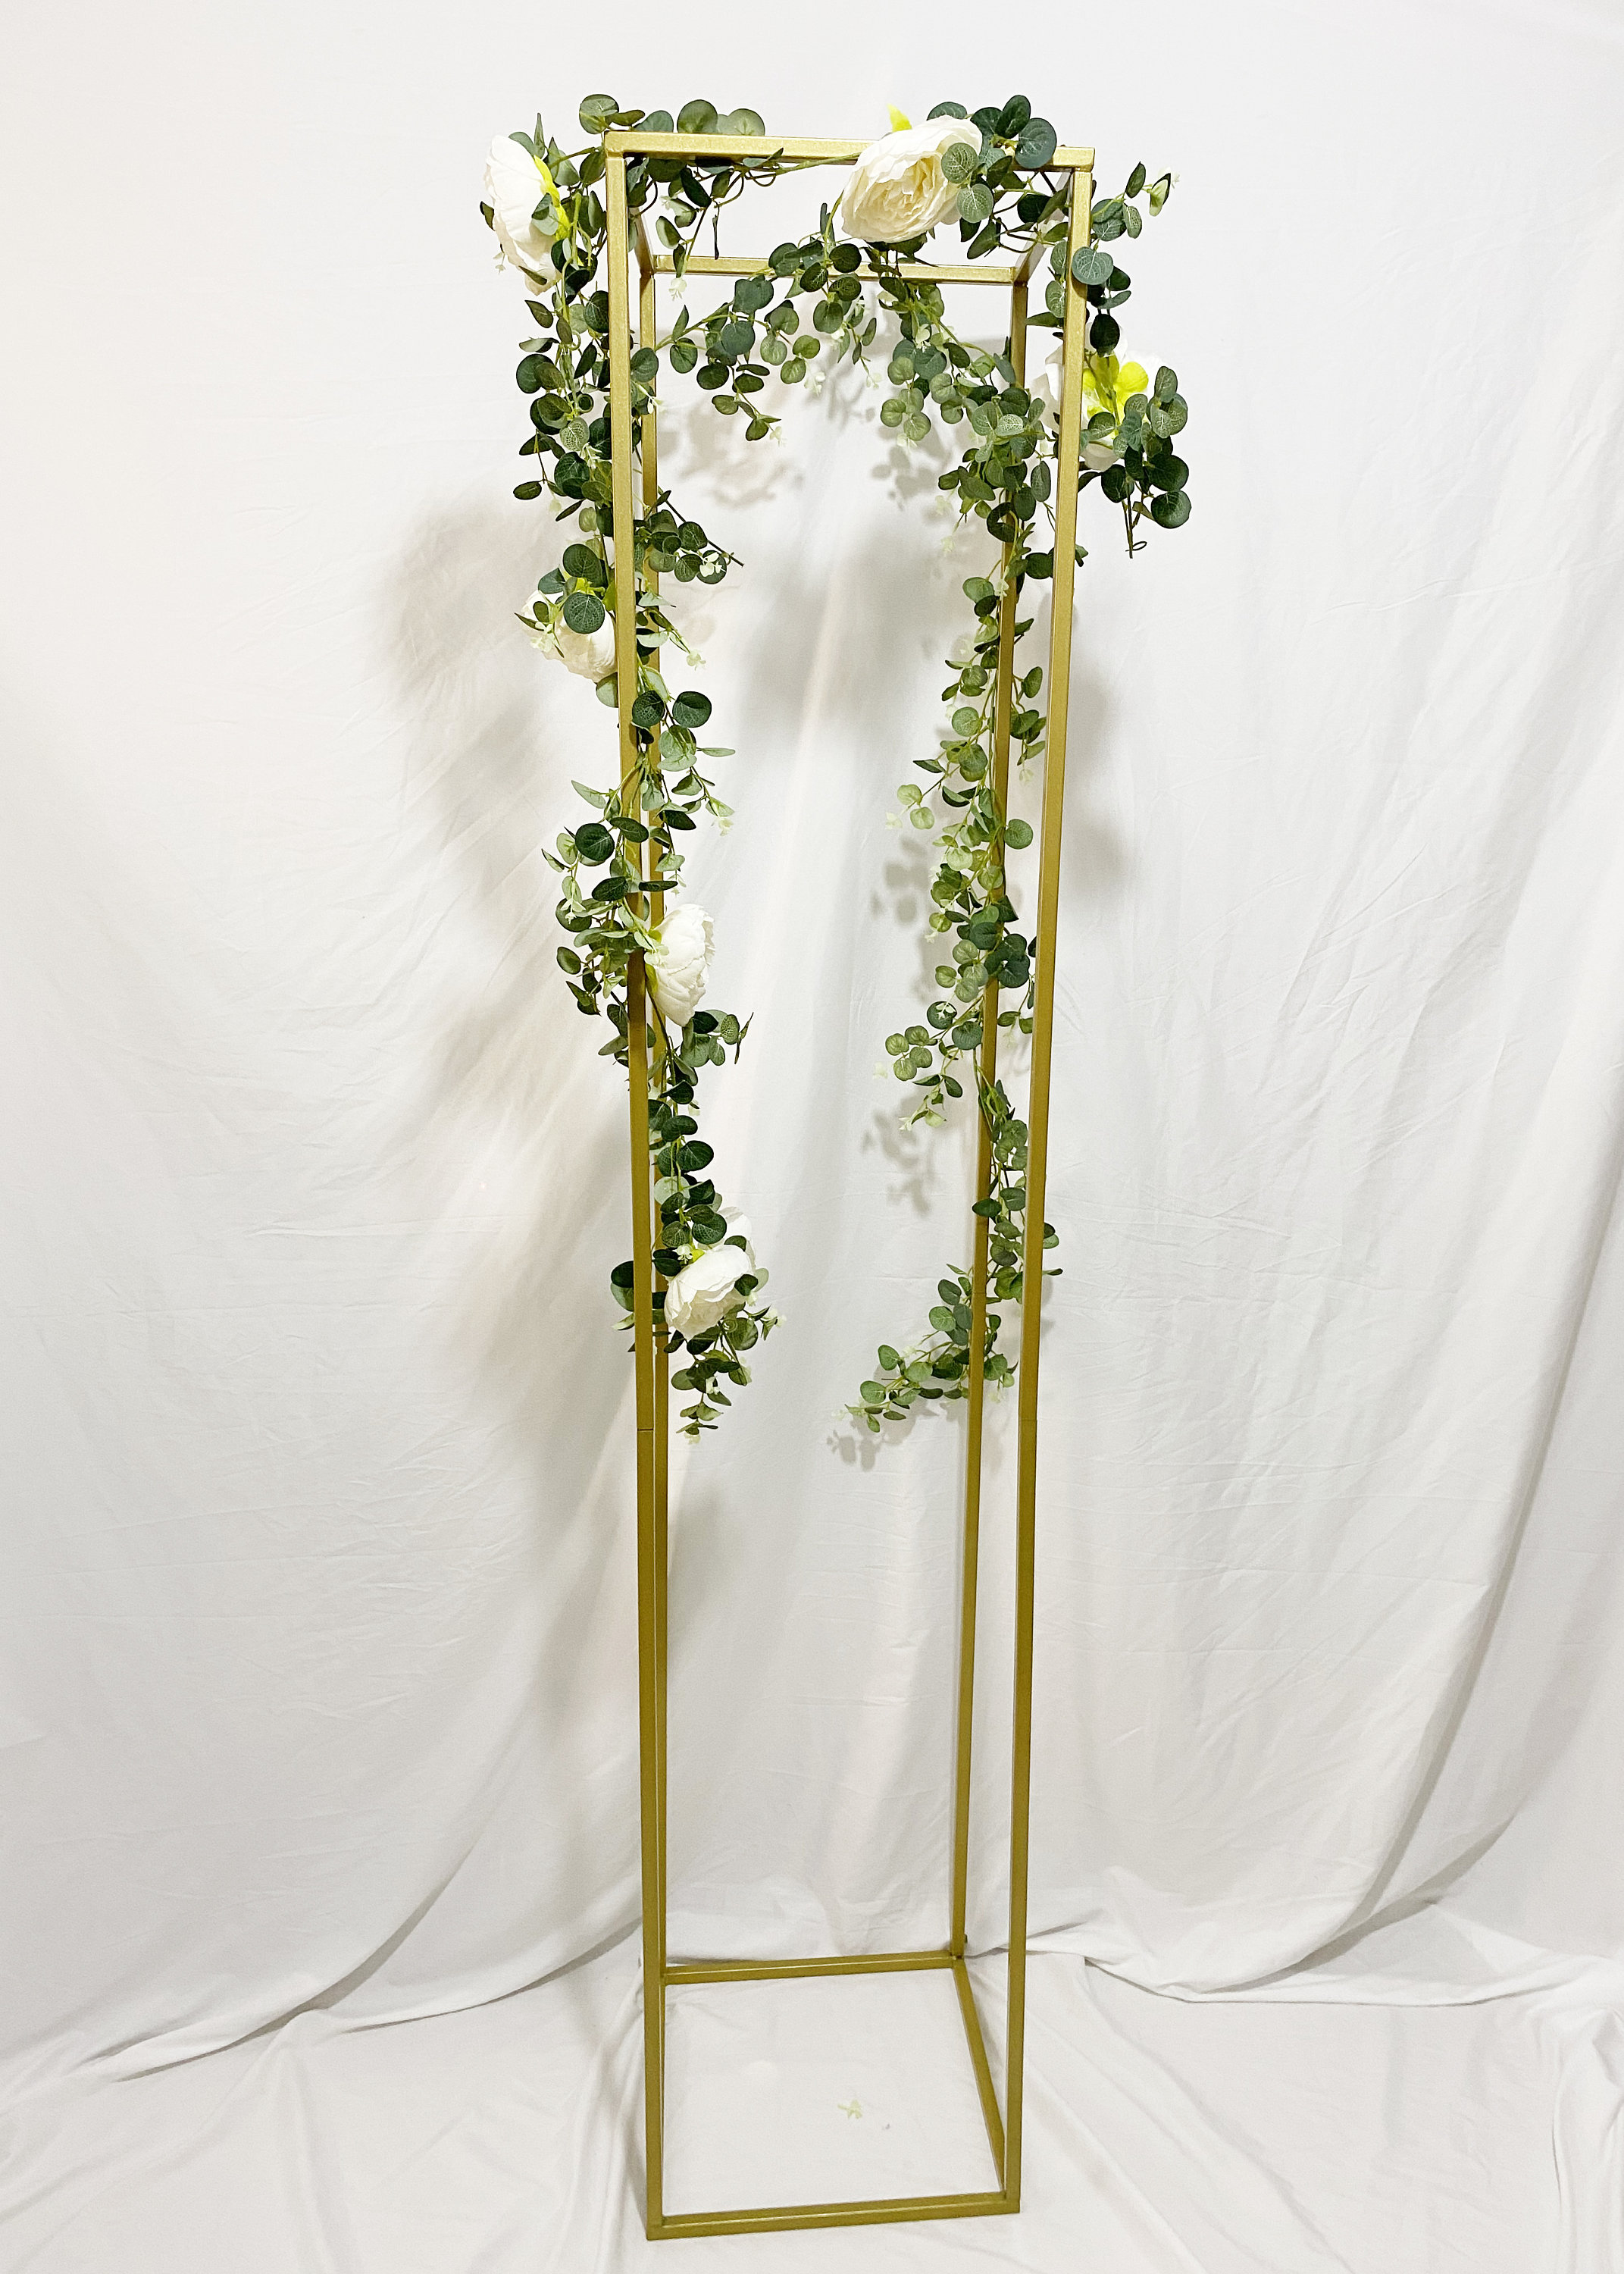 Stand Only Gold Floor Metal Tall Flower Arch Backdrop Centerpieces For  Wedding Decoration Floral Arrangement Stand Wedding Stage Decor From  Senyuweddingsupplies, $580.91